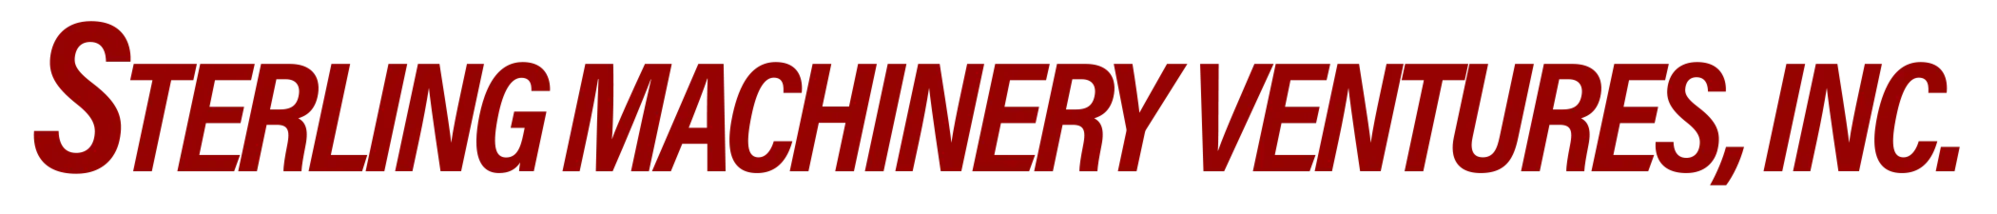 Sterling Machinery Ventures Logo